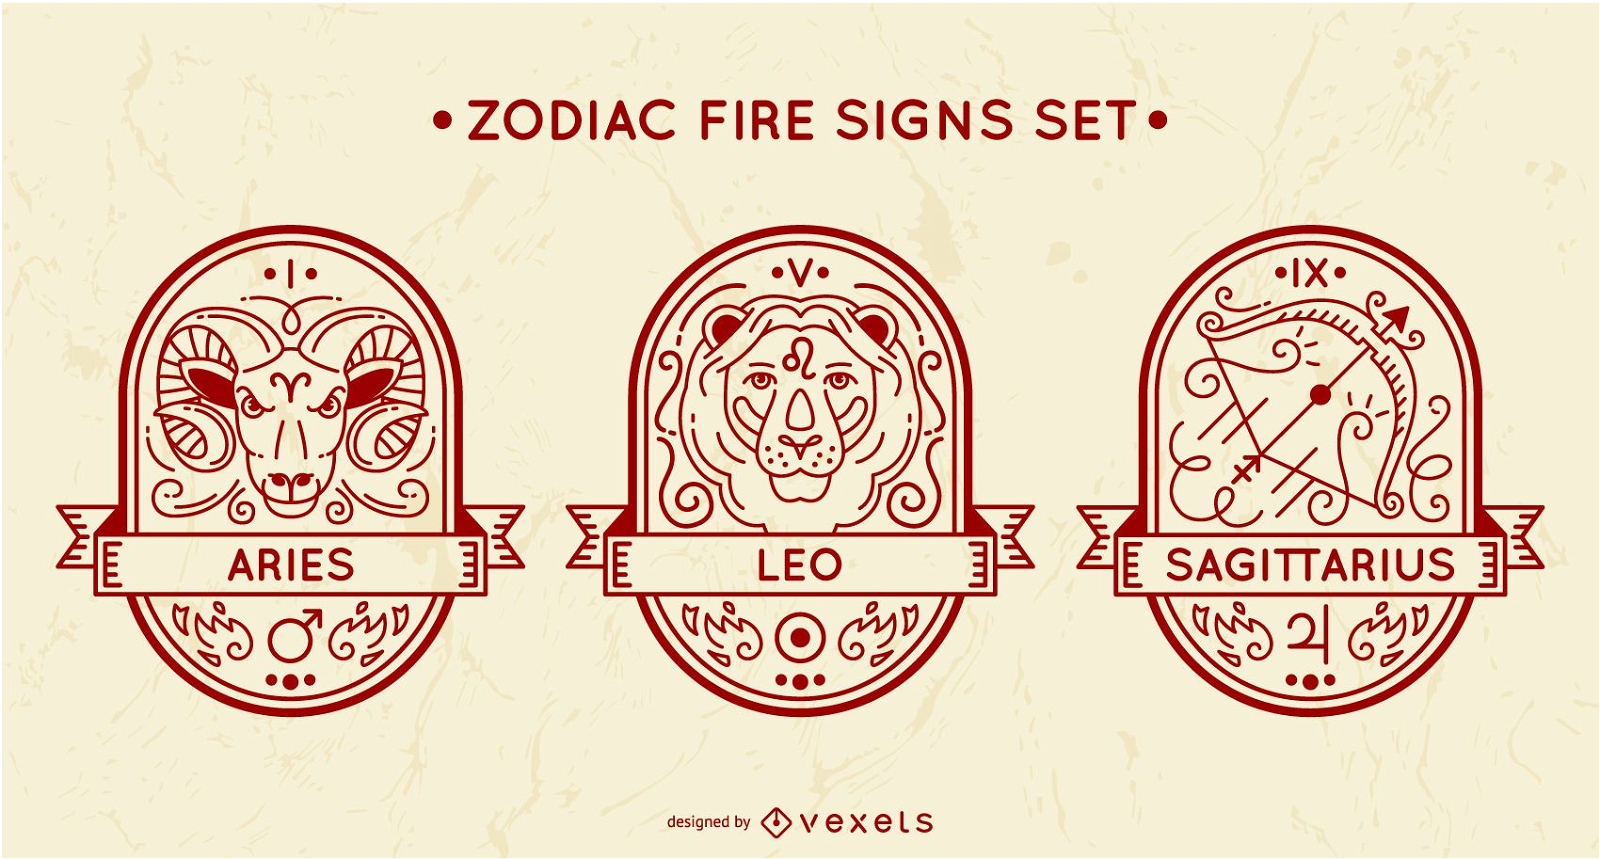 Zodiac fire signs set